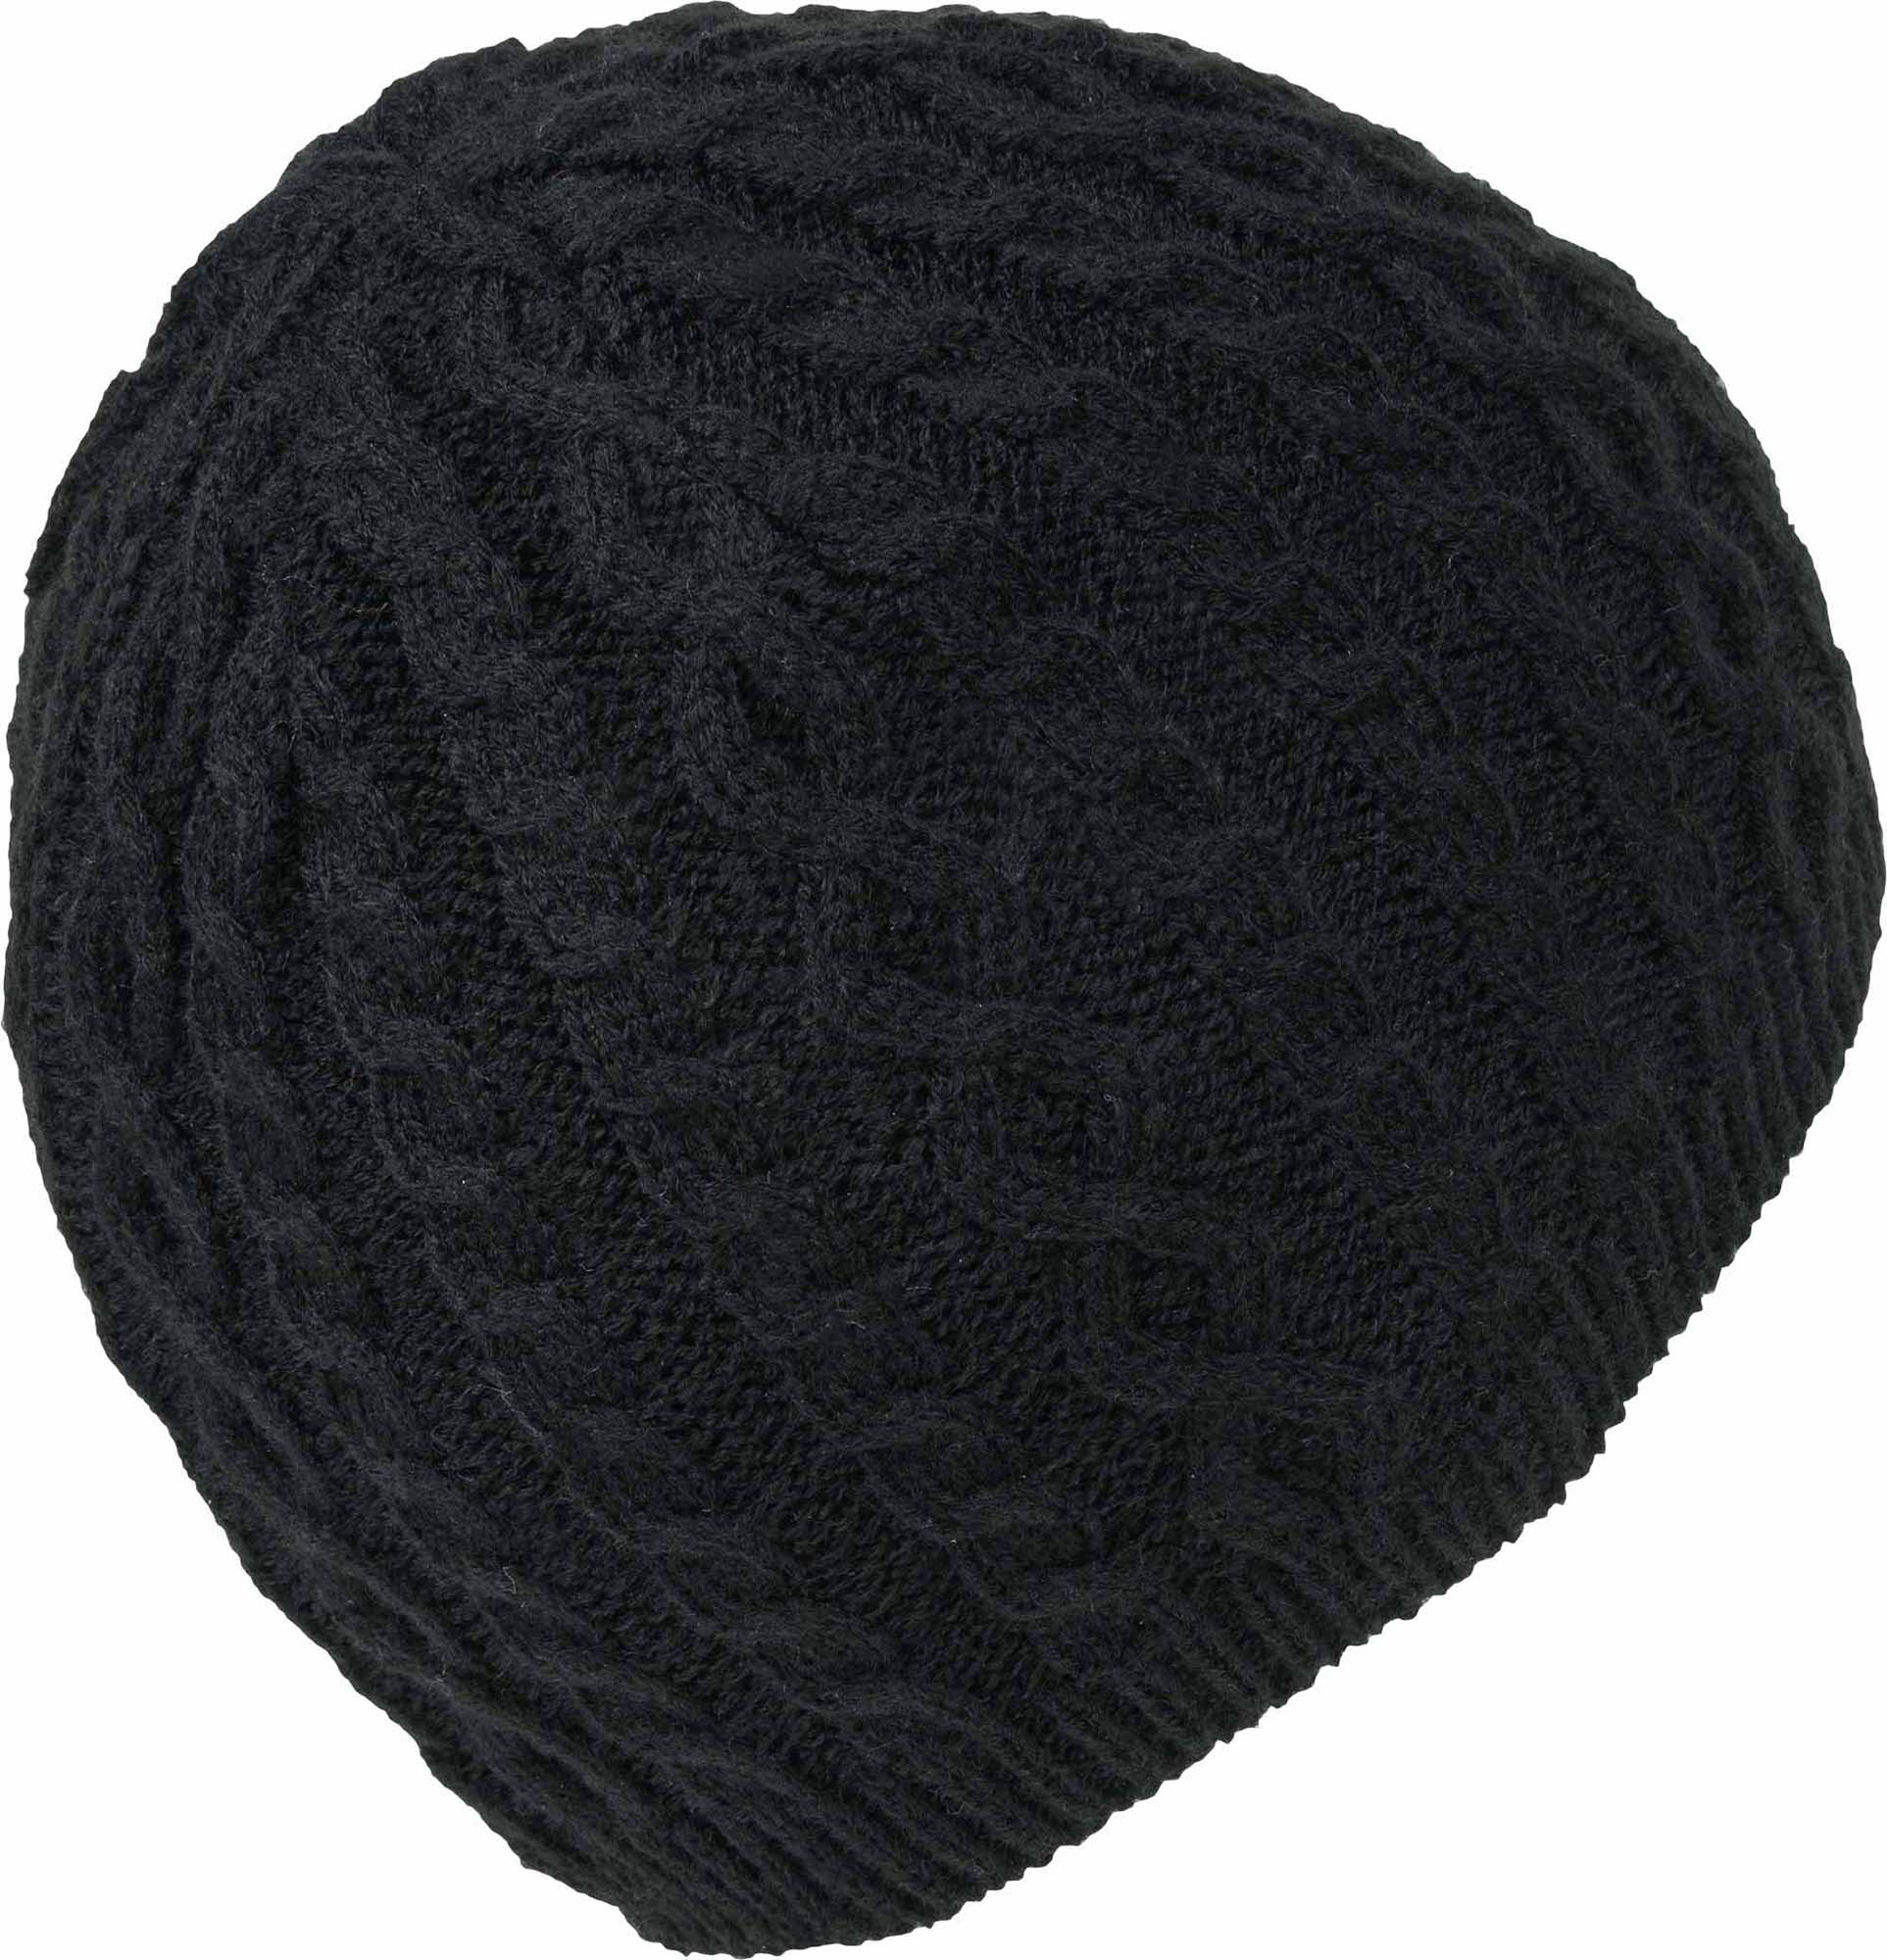 Women’s knitted beanie